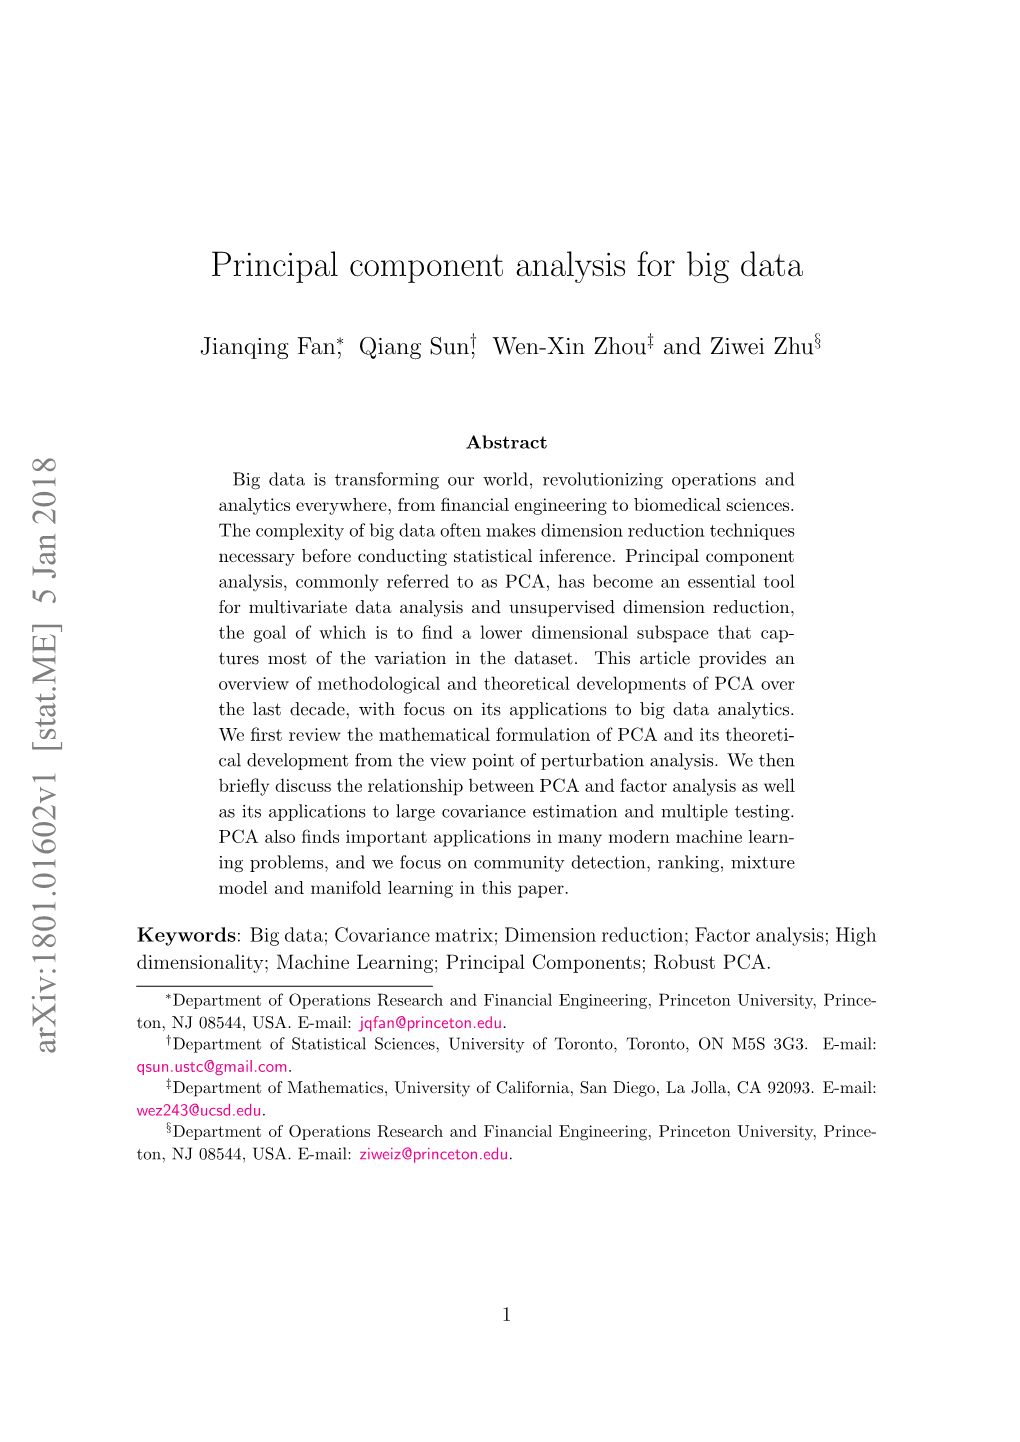 Principal Component Analysis for Big Data Arxiv:1801.01602V1 [Stat.ME